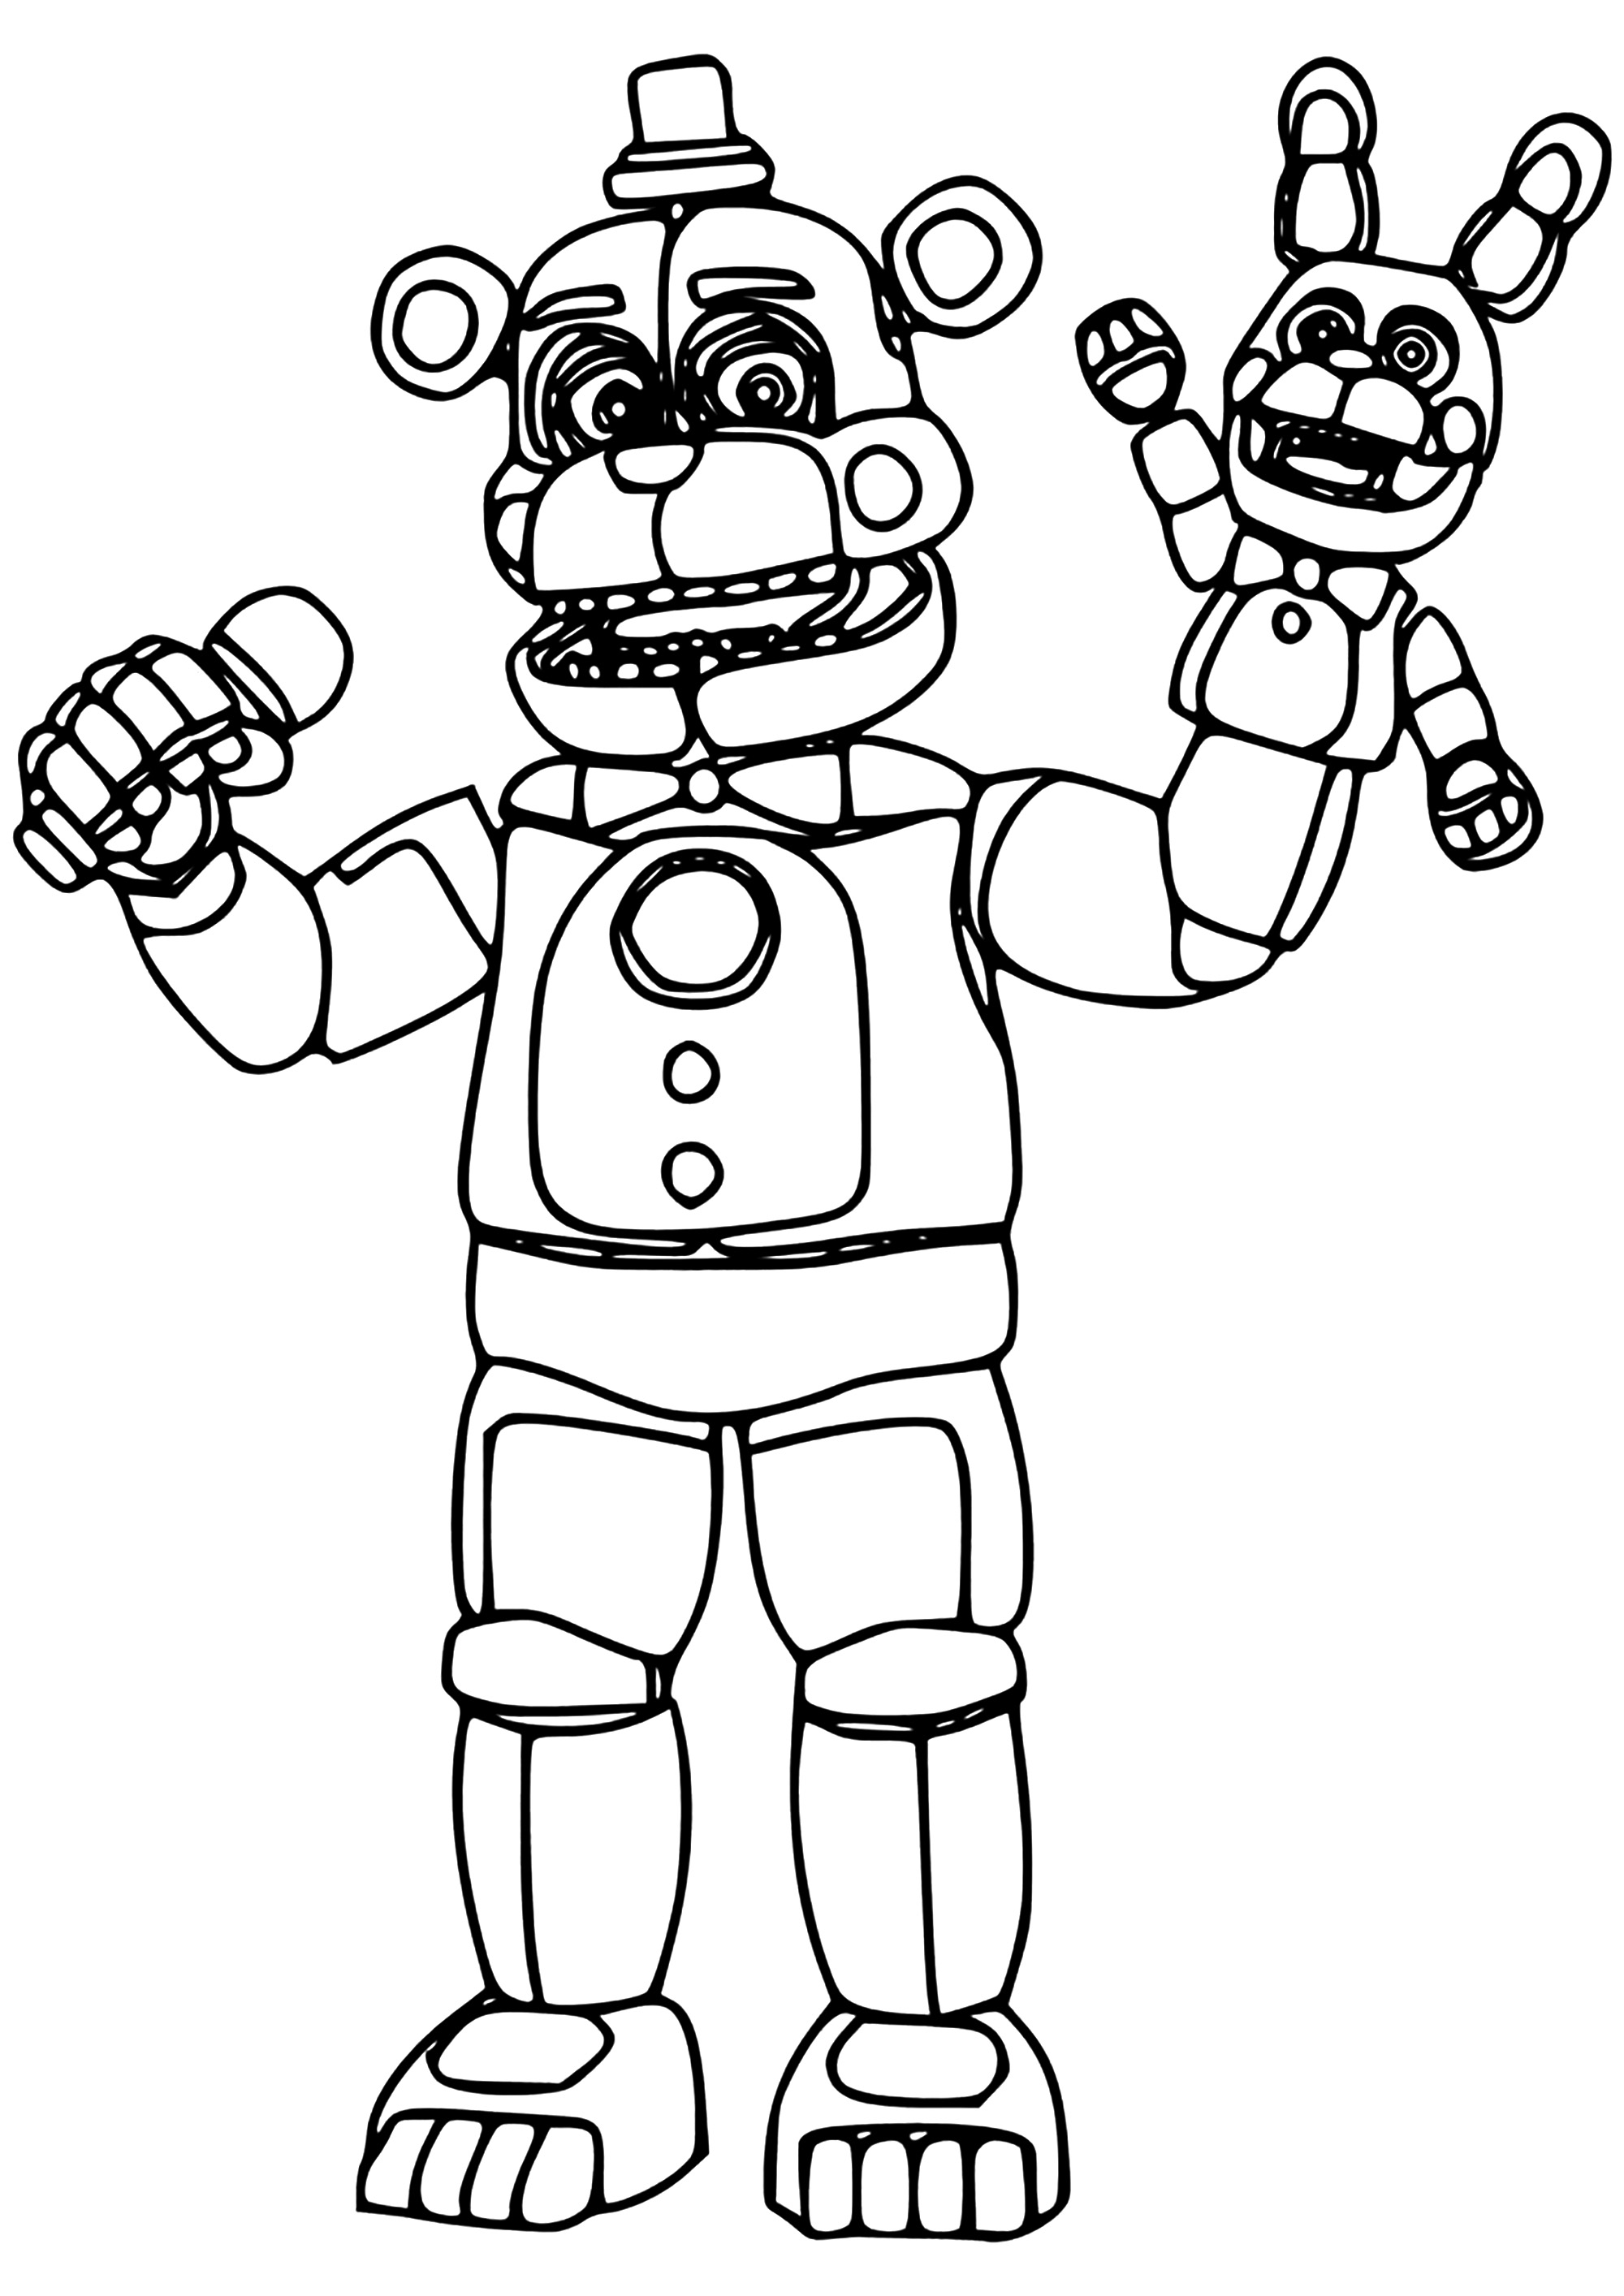 Freddy Fazbear con una marioneta